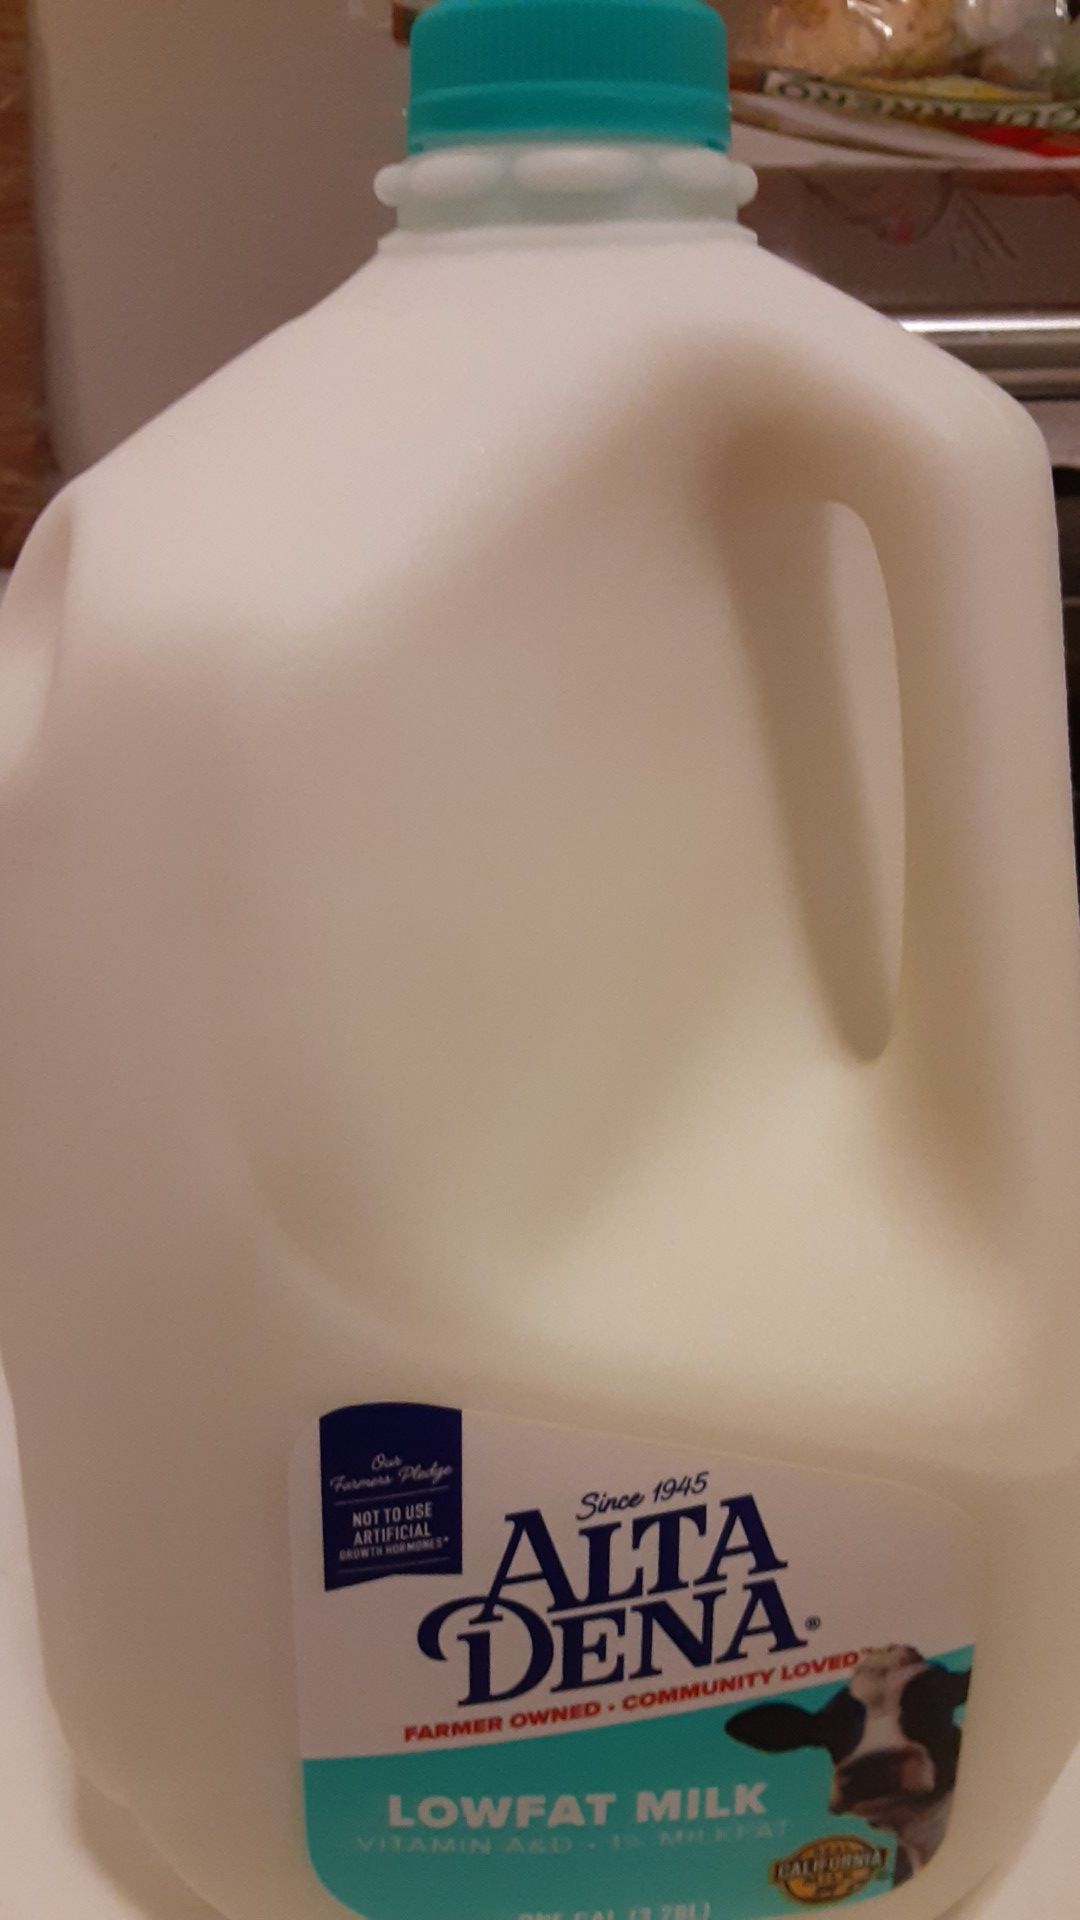 Free milk